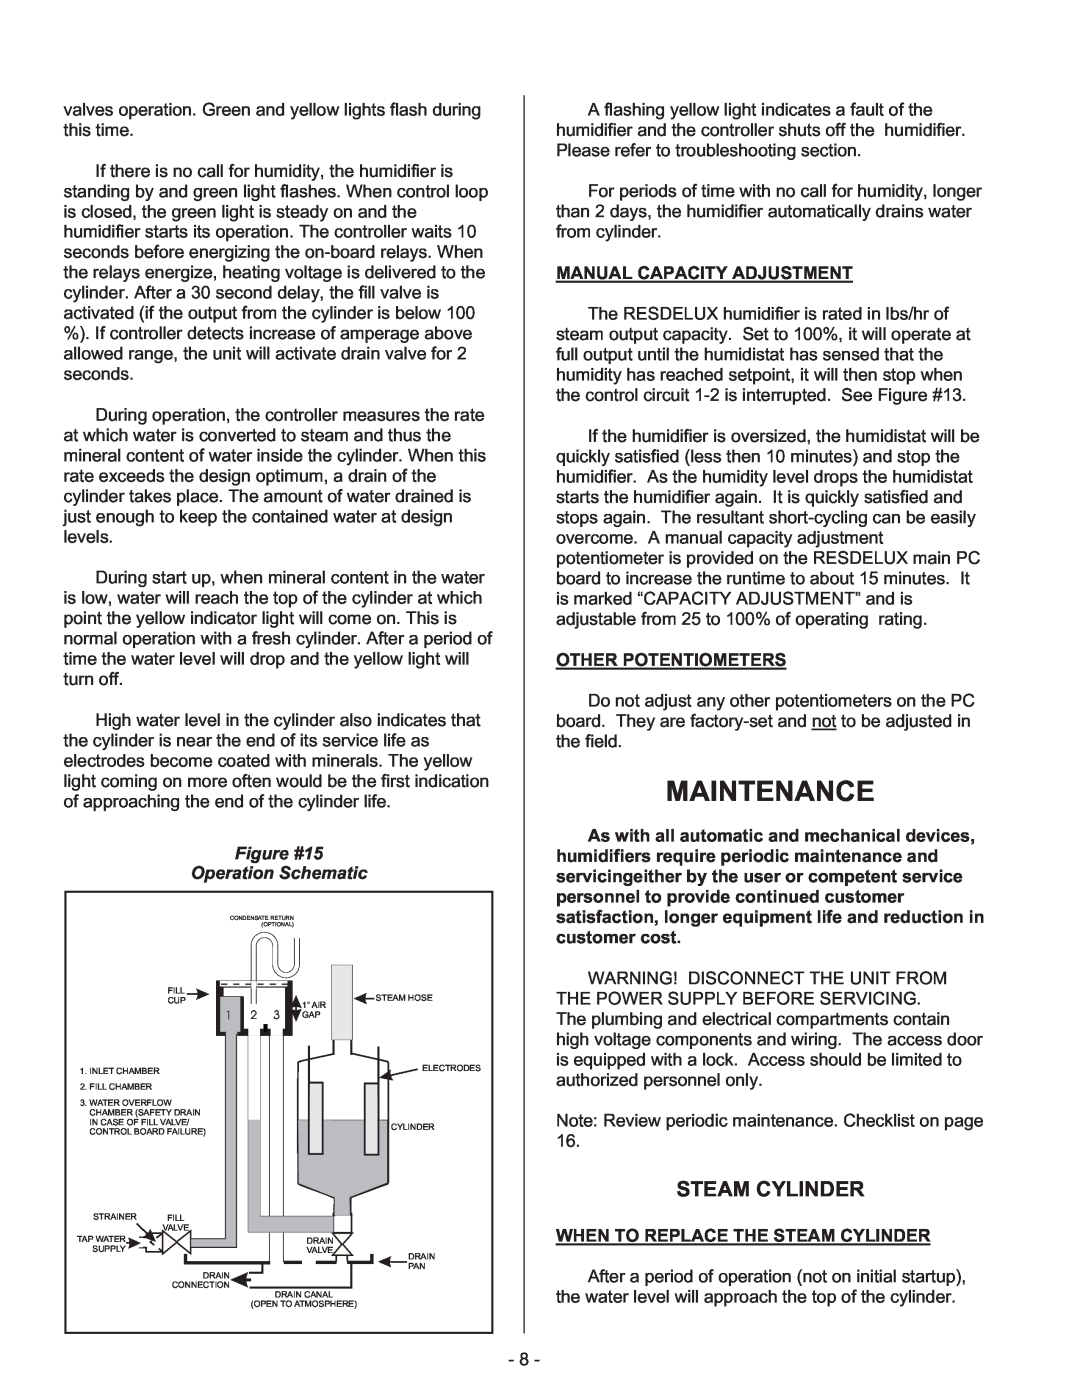 Nortec 1505691-B manual Maintenance, Steam Cylinder, Figure #15 Operation Schematic, Manual Capacity Adjustment 